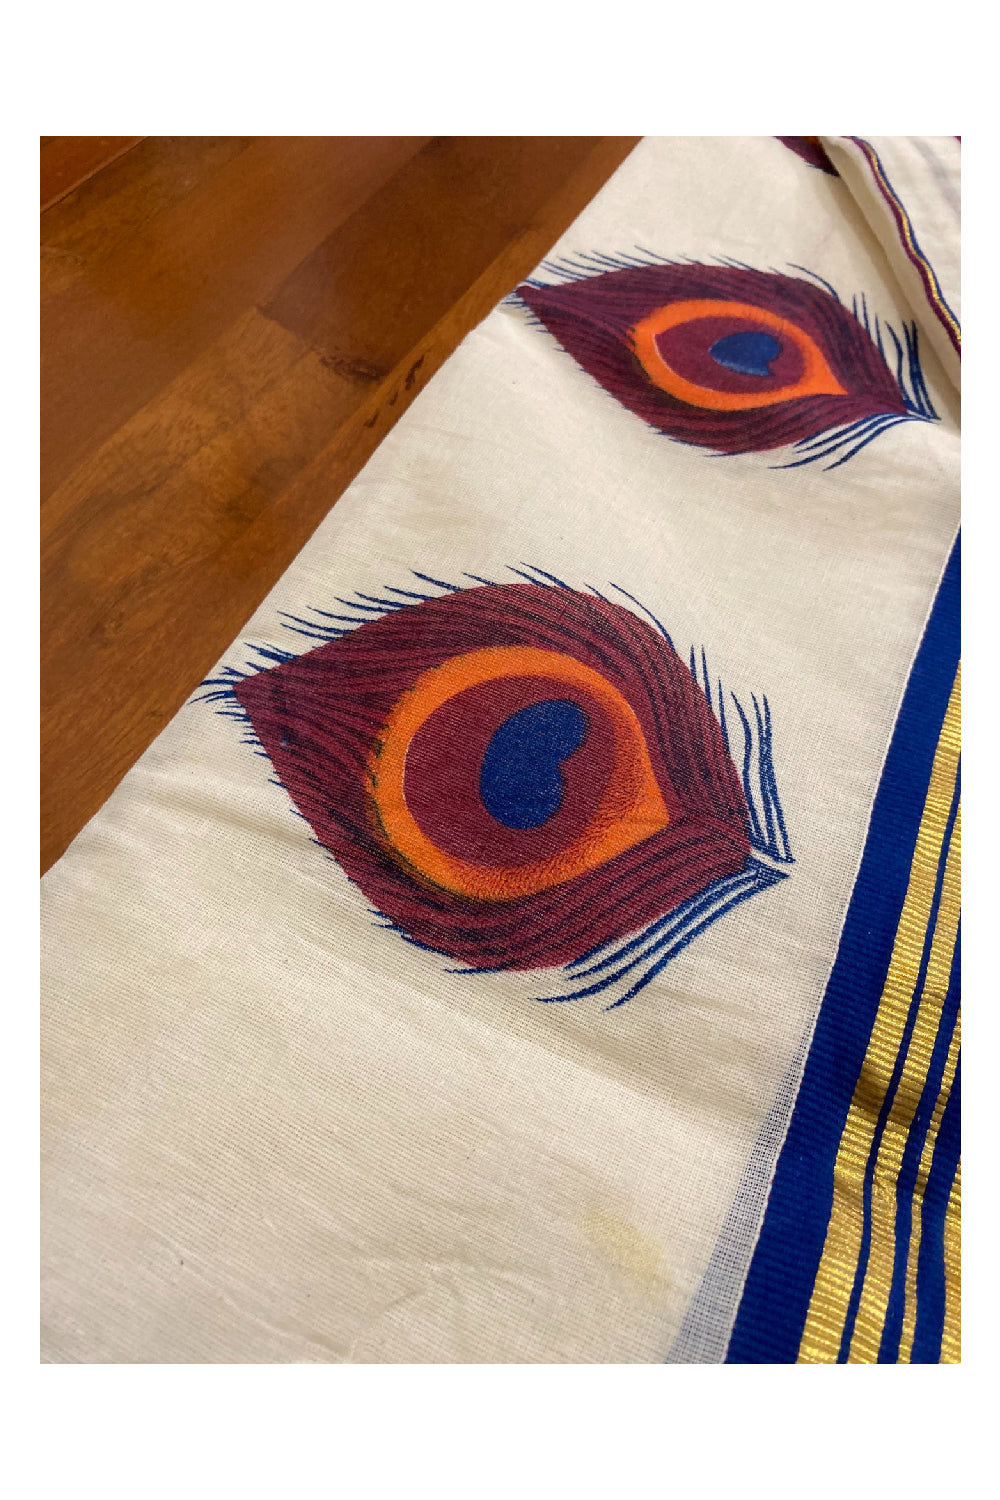 Single Set Mundu in Kasavu and Kara Border with Peacock Feather Hand Block Prints